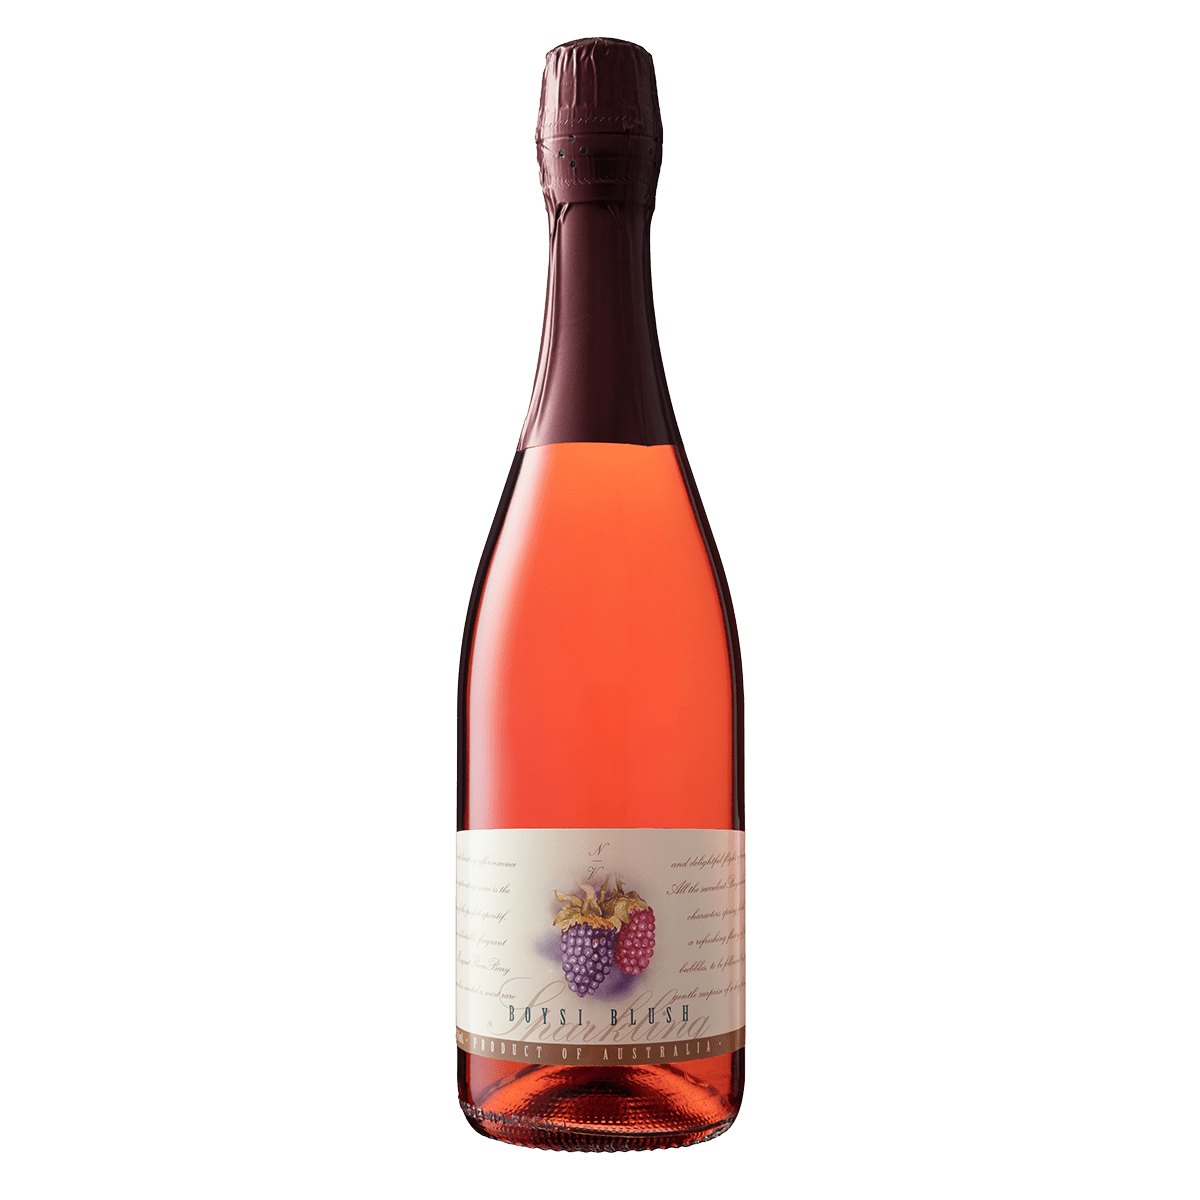 A bottle of Boysi Blush Sparkling Wine